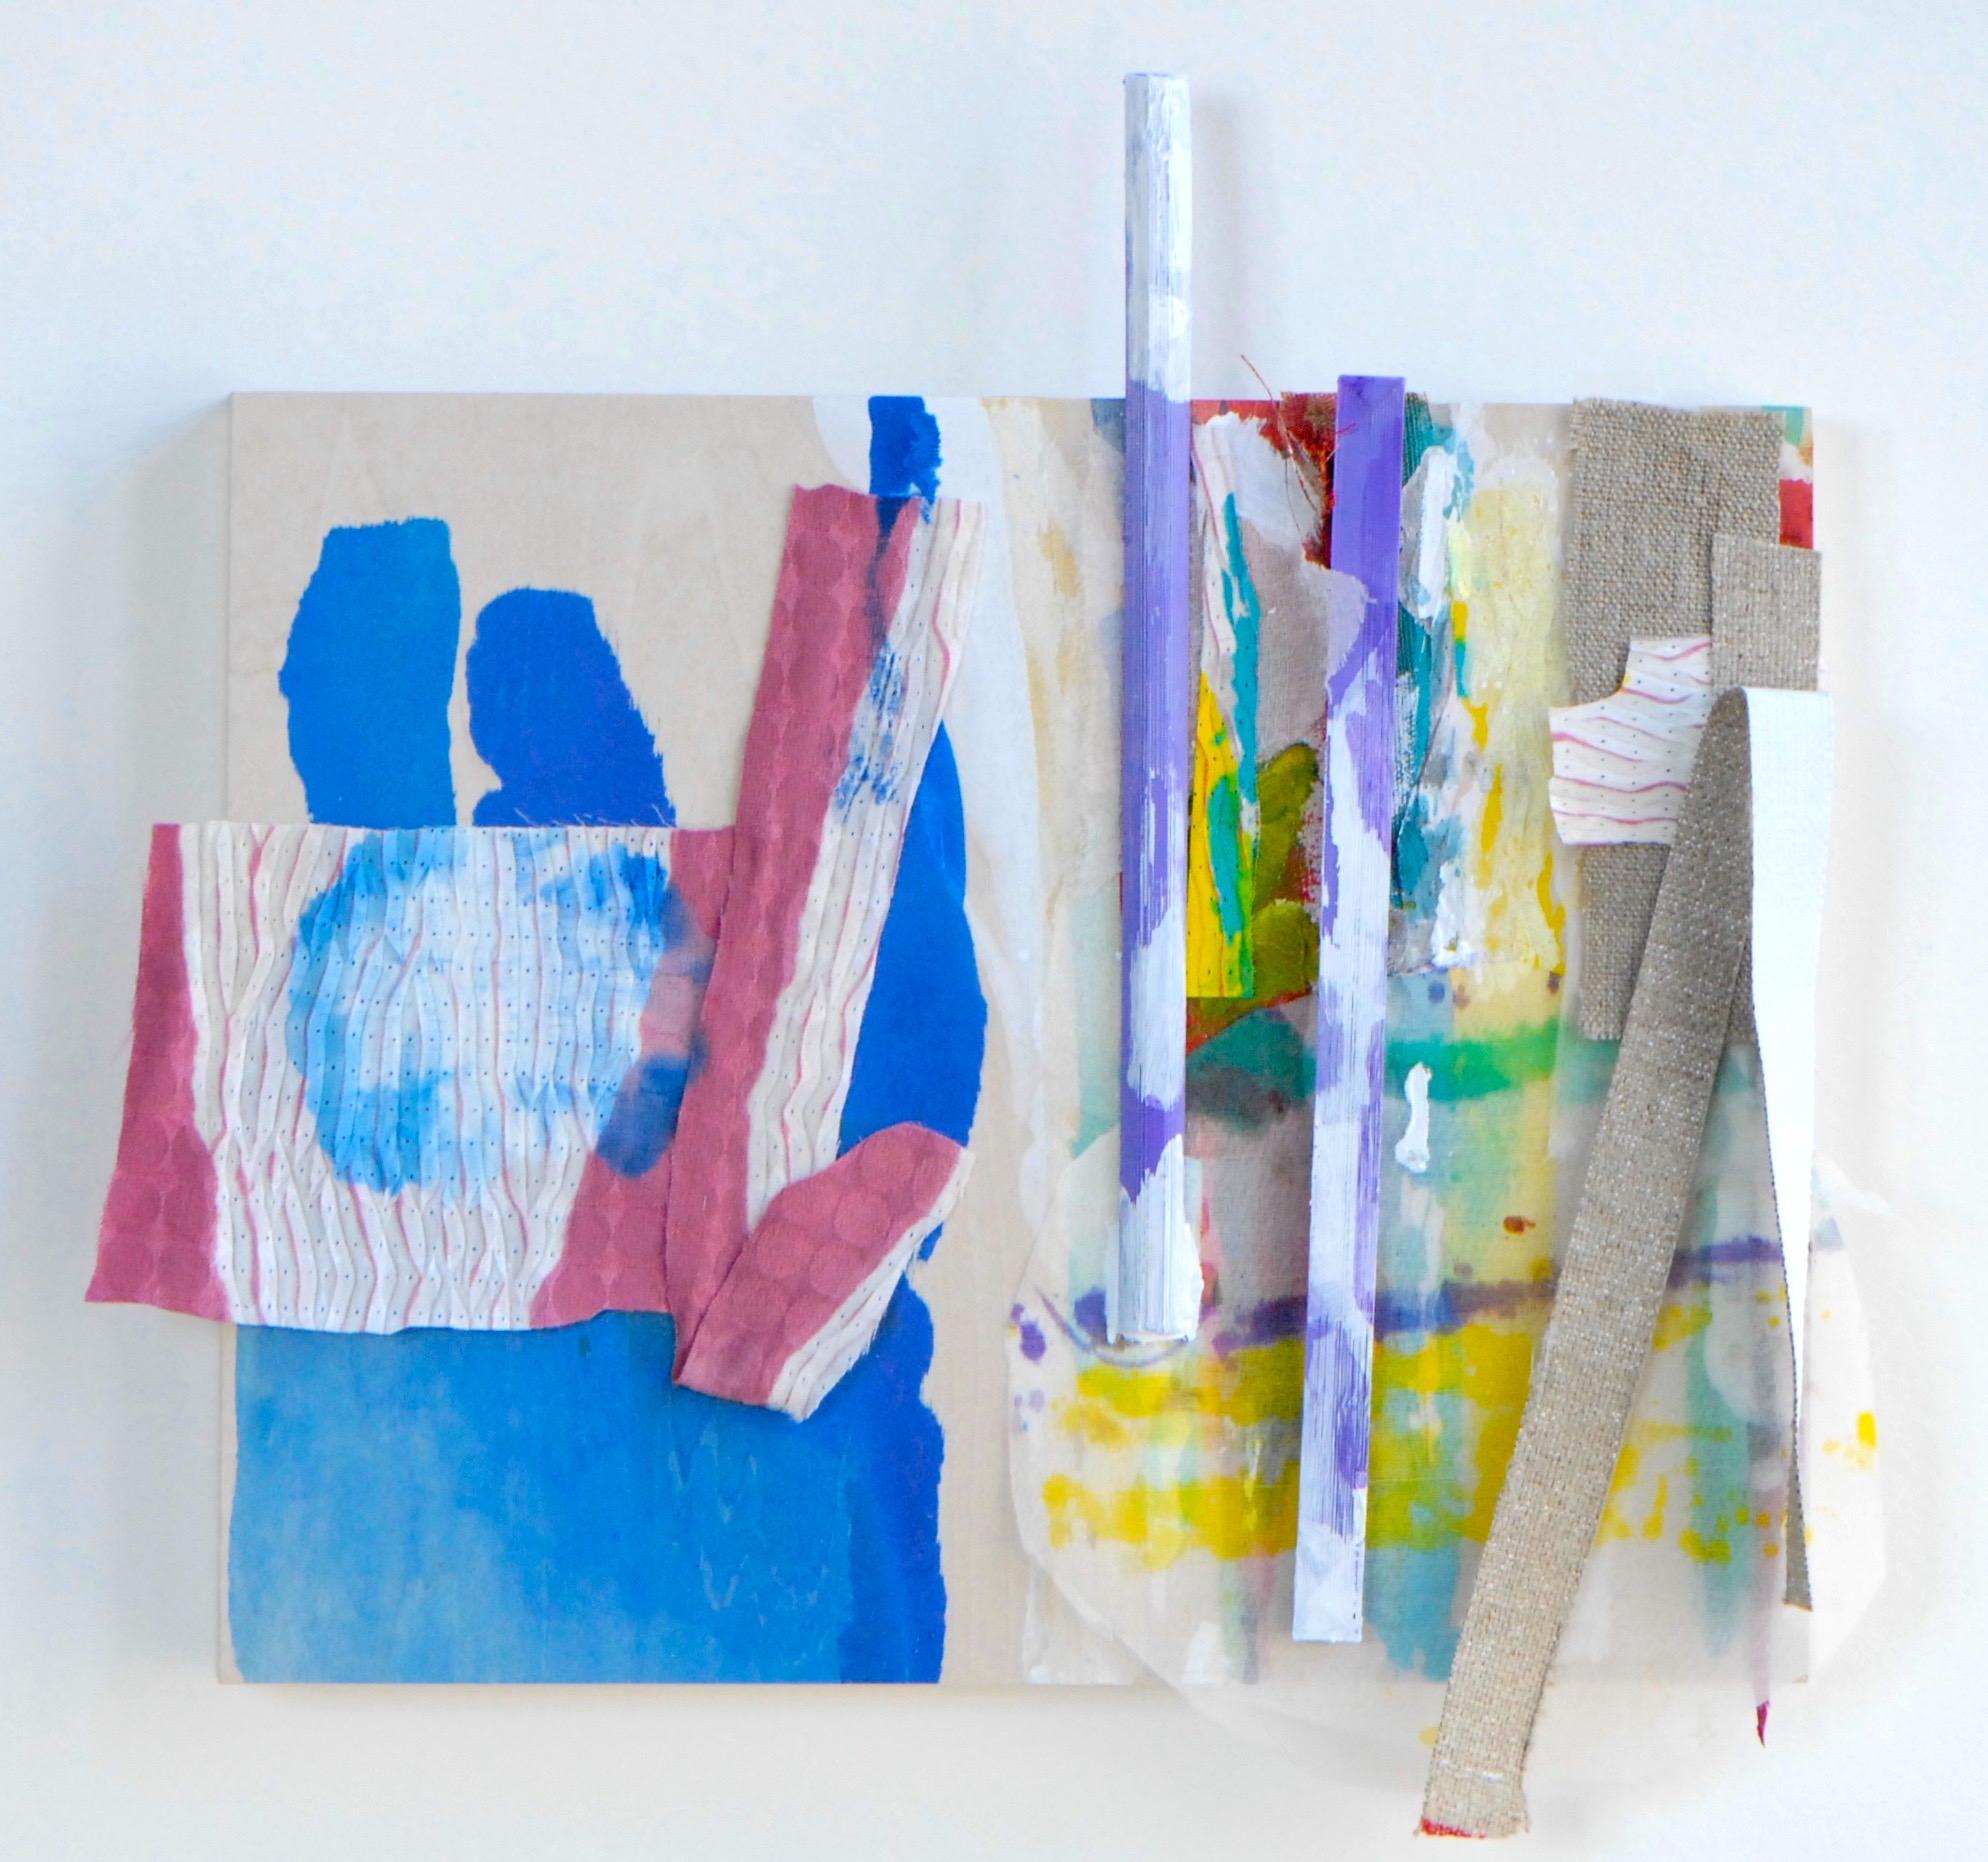 Sylvia Schwartz 8, 2018, wood, fabric, plastic, 11" x 11.5" x 2"